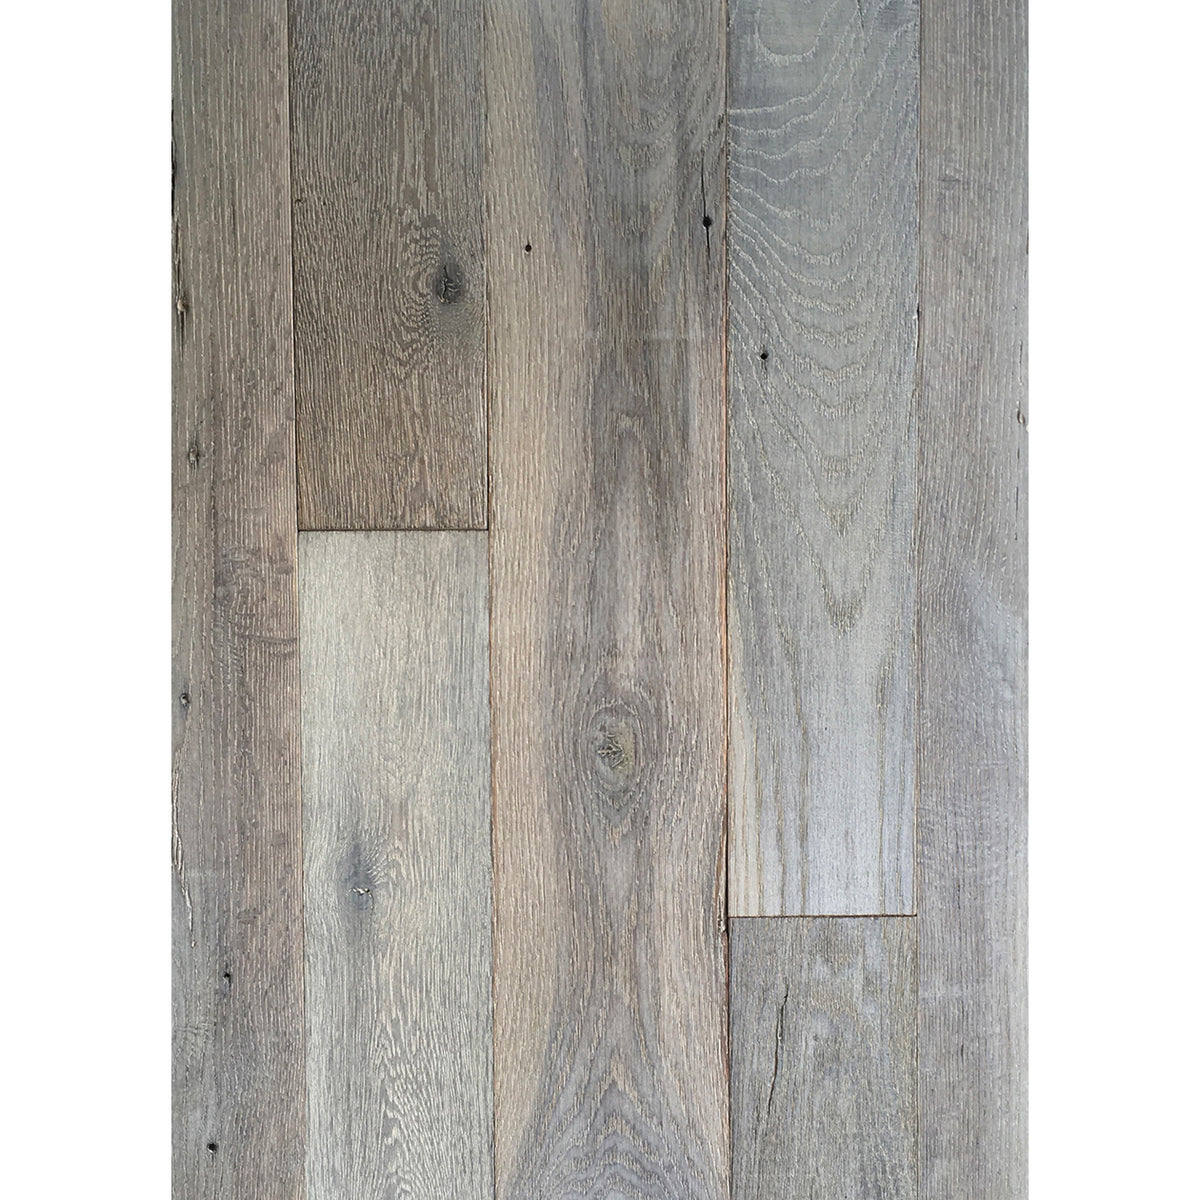 Tennessee Wood Flooring - Reclaimed - Silver Oak